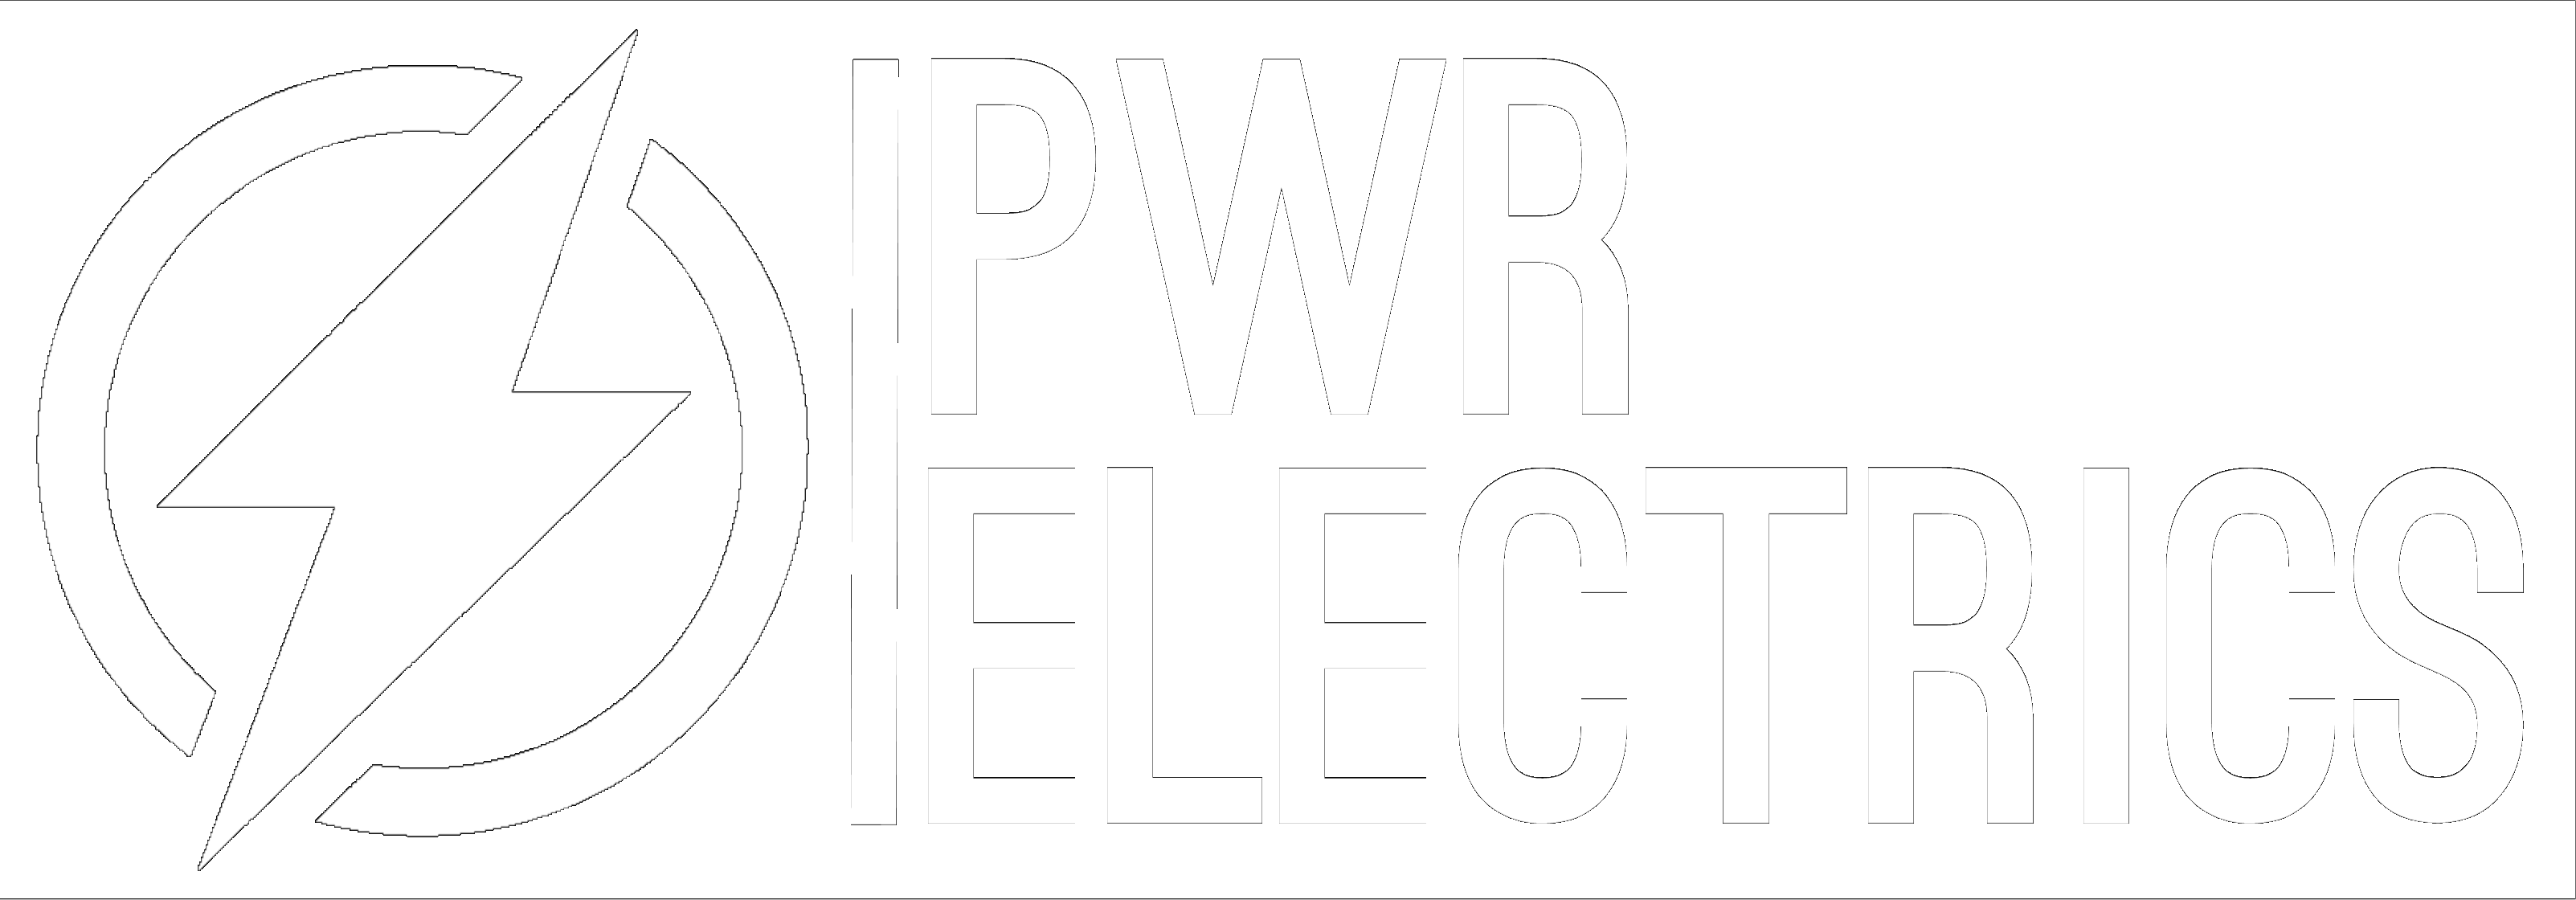 PWR Electrics